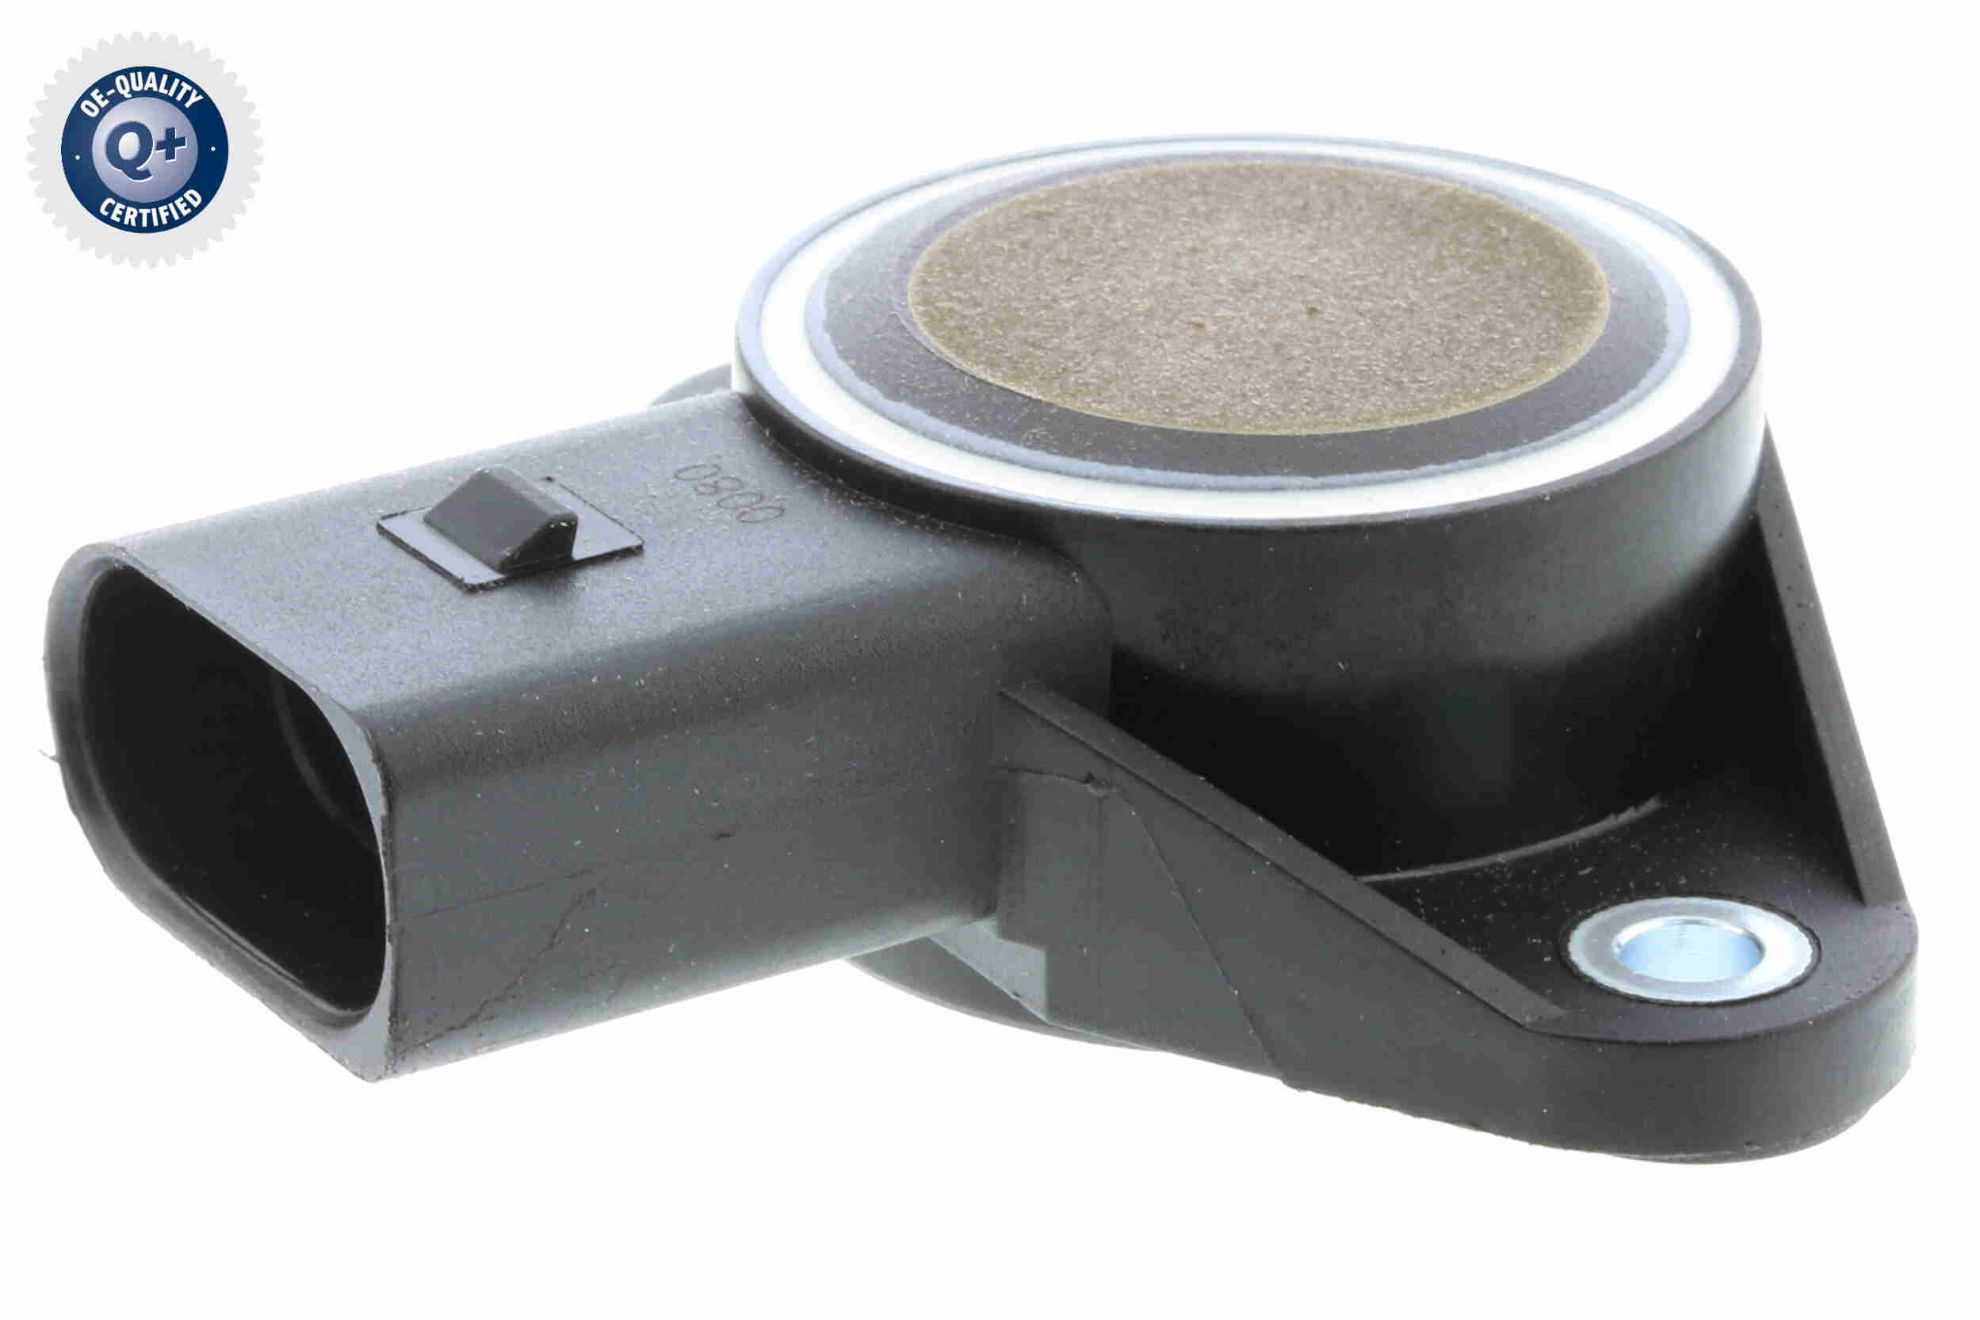 Obrázok Snímač prepínacej klapky sacieho potrubia VEMO Q+, original equipment manufacturer quality V10721279